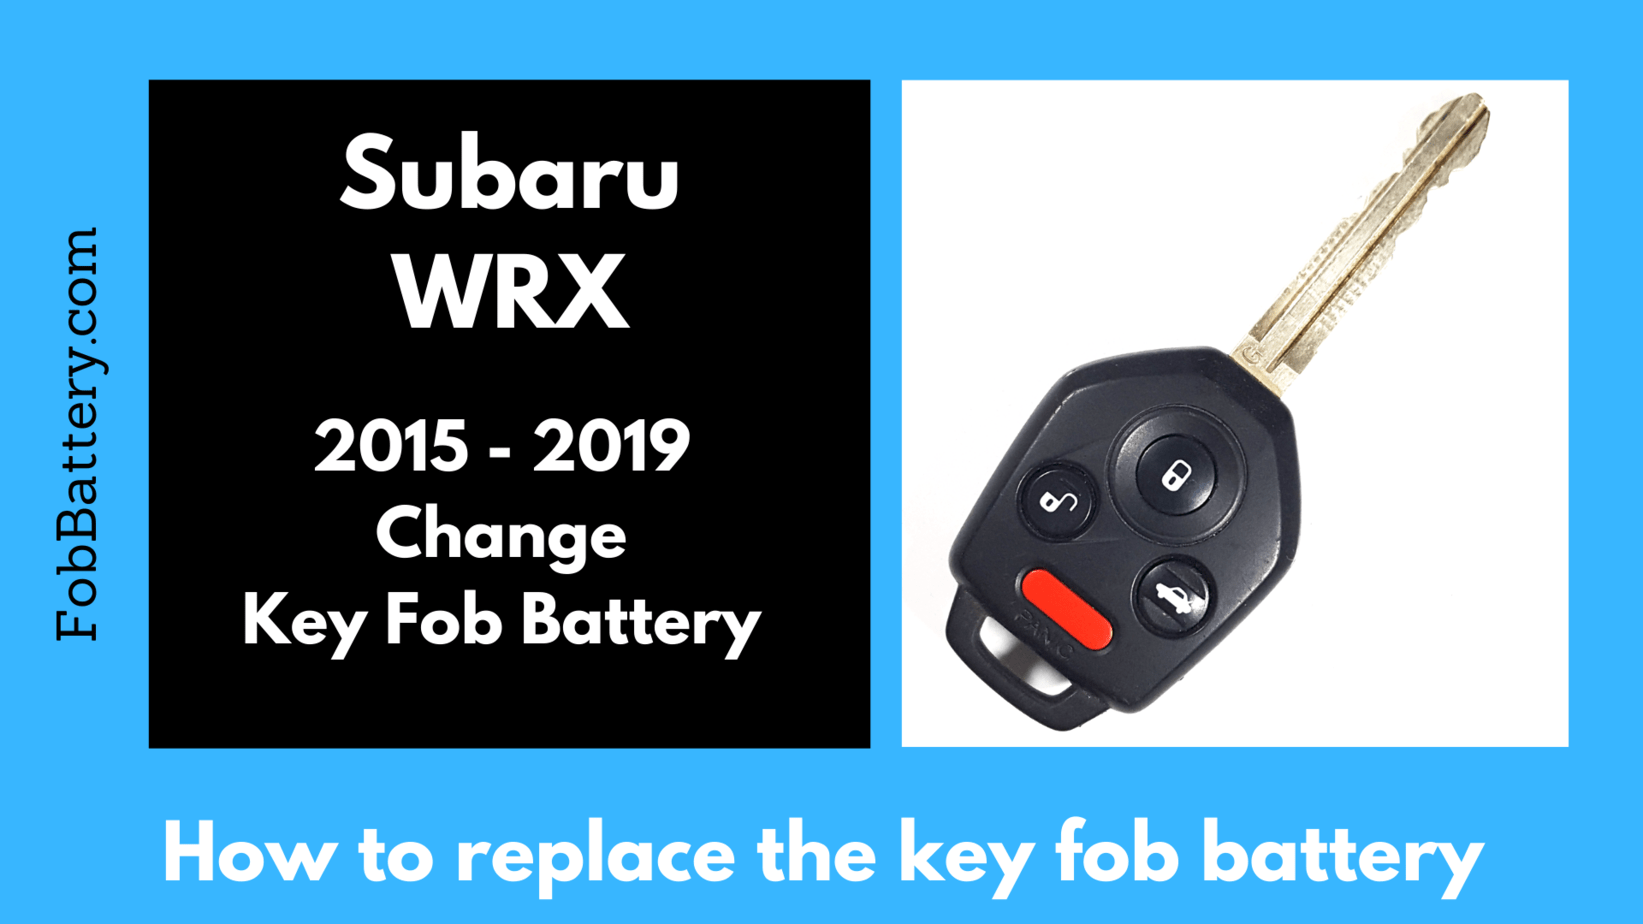 Subaru WRX key fob battery replacement